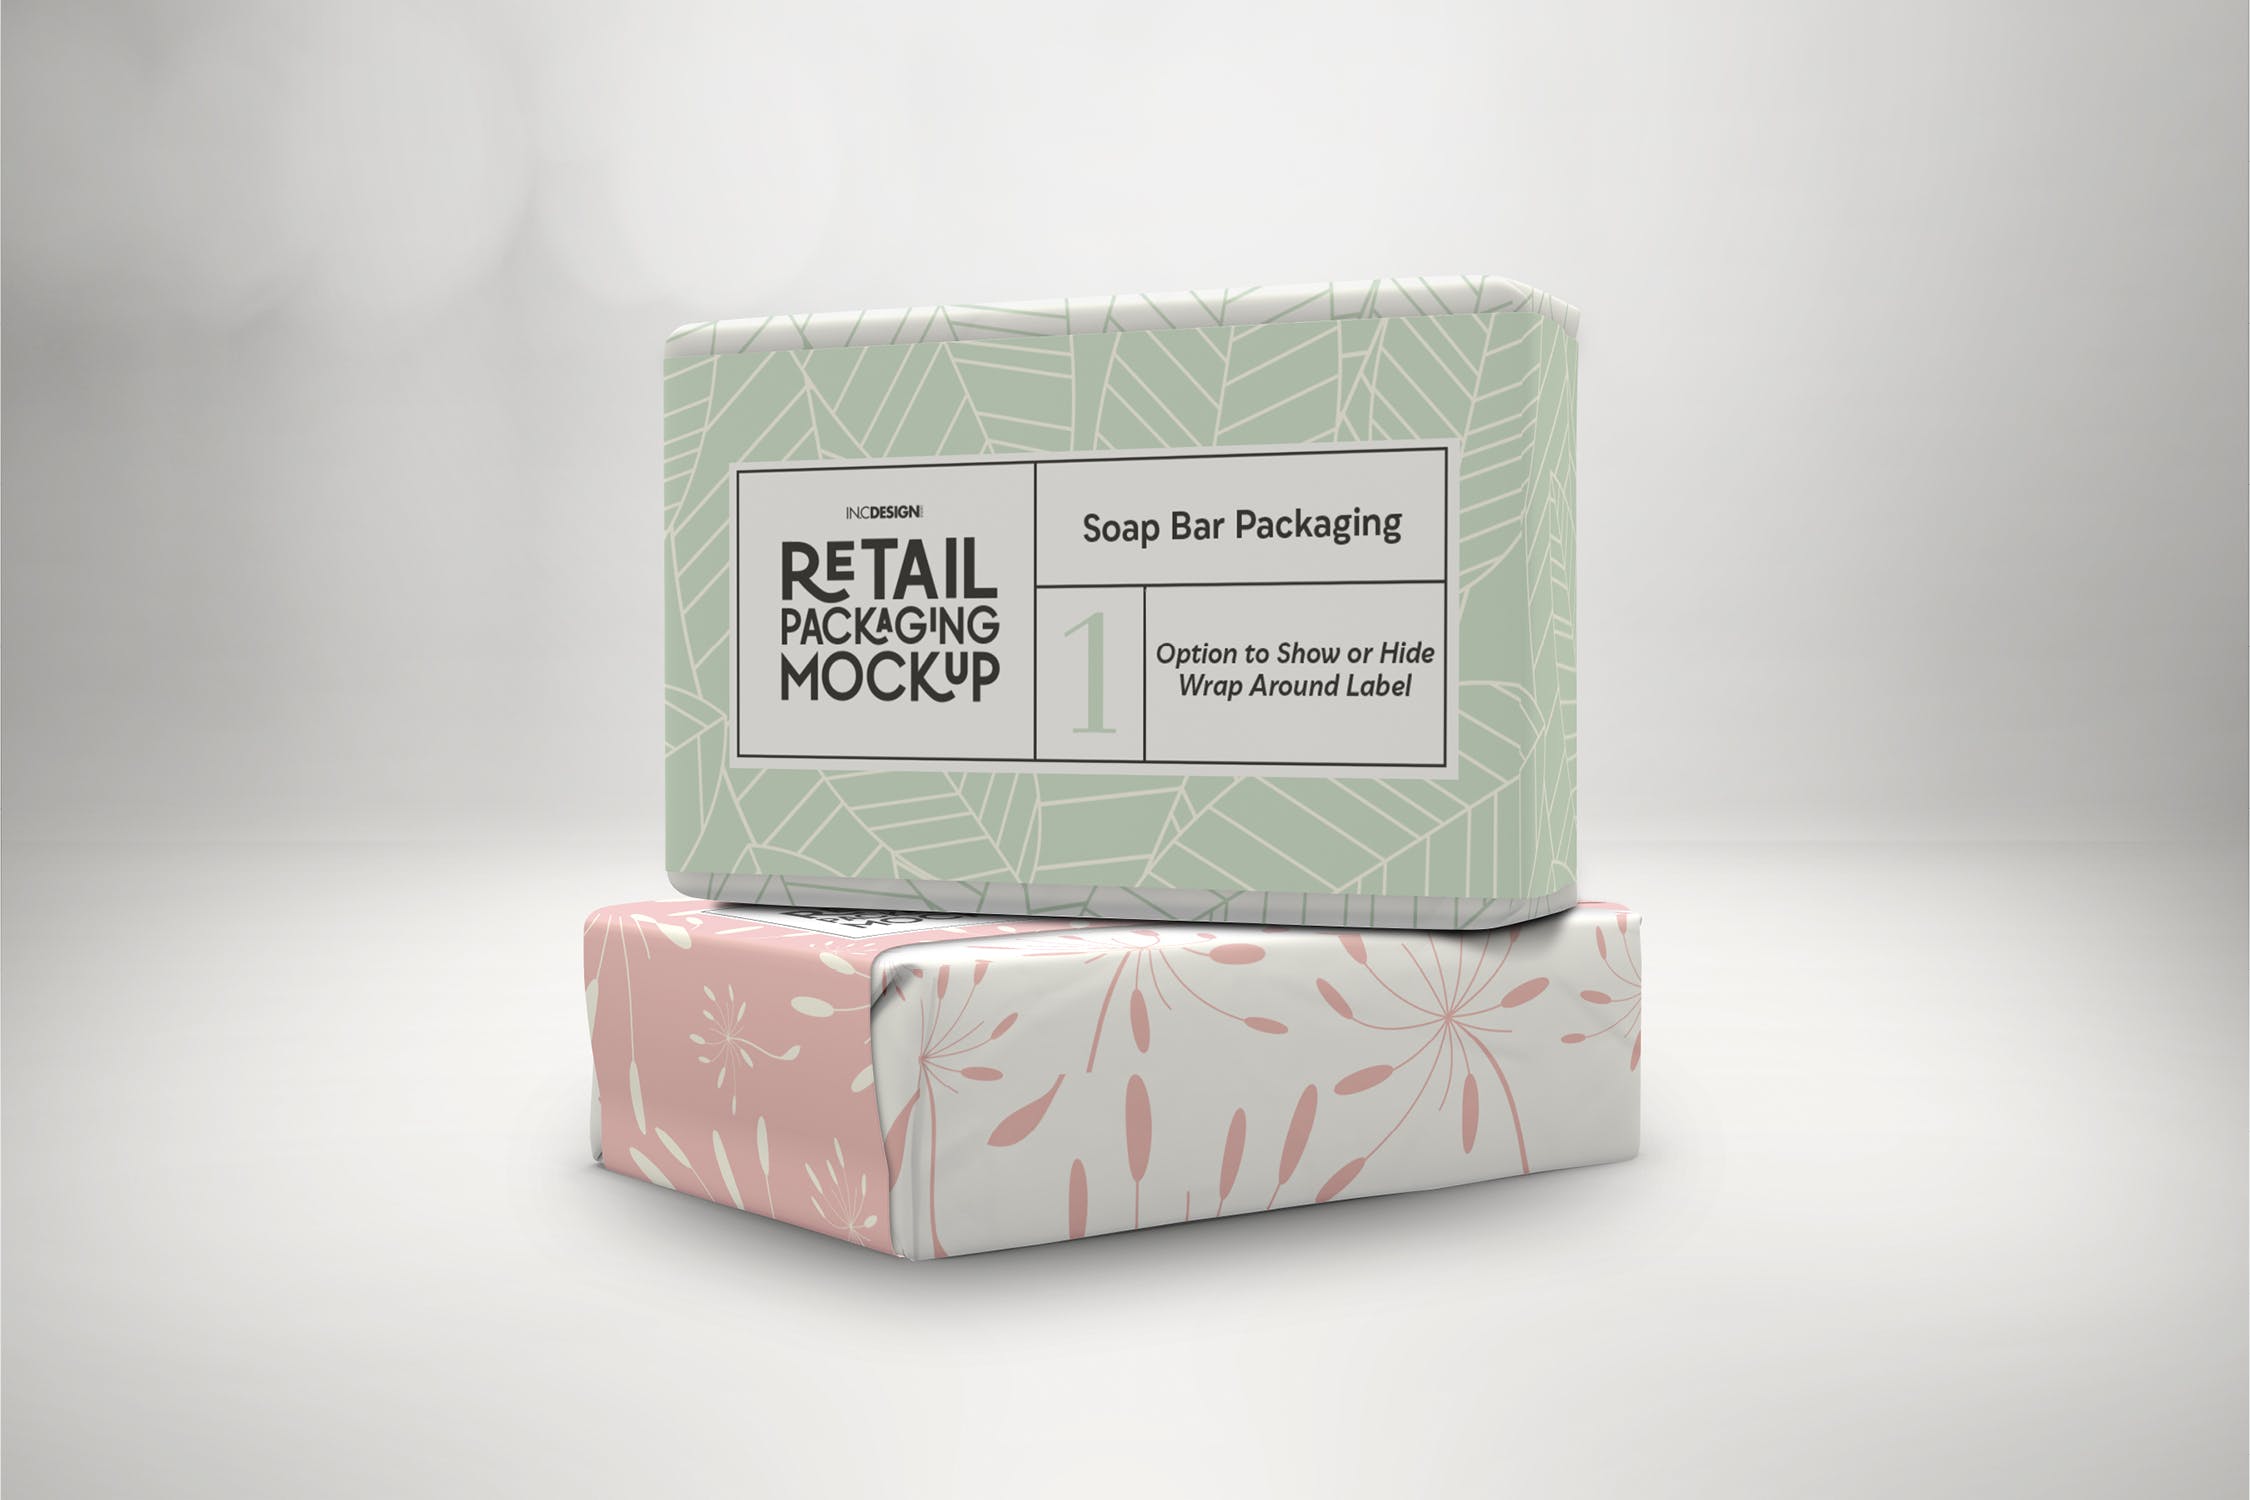 肥皂包装纸袋设计效果图素材库精选 Retail Soap Bar Packaging Mockup插图(1)